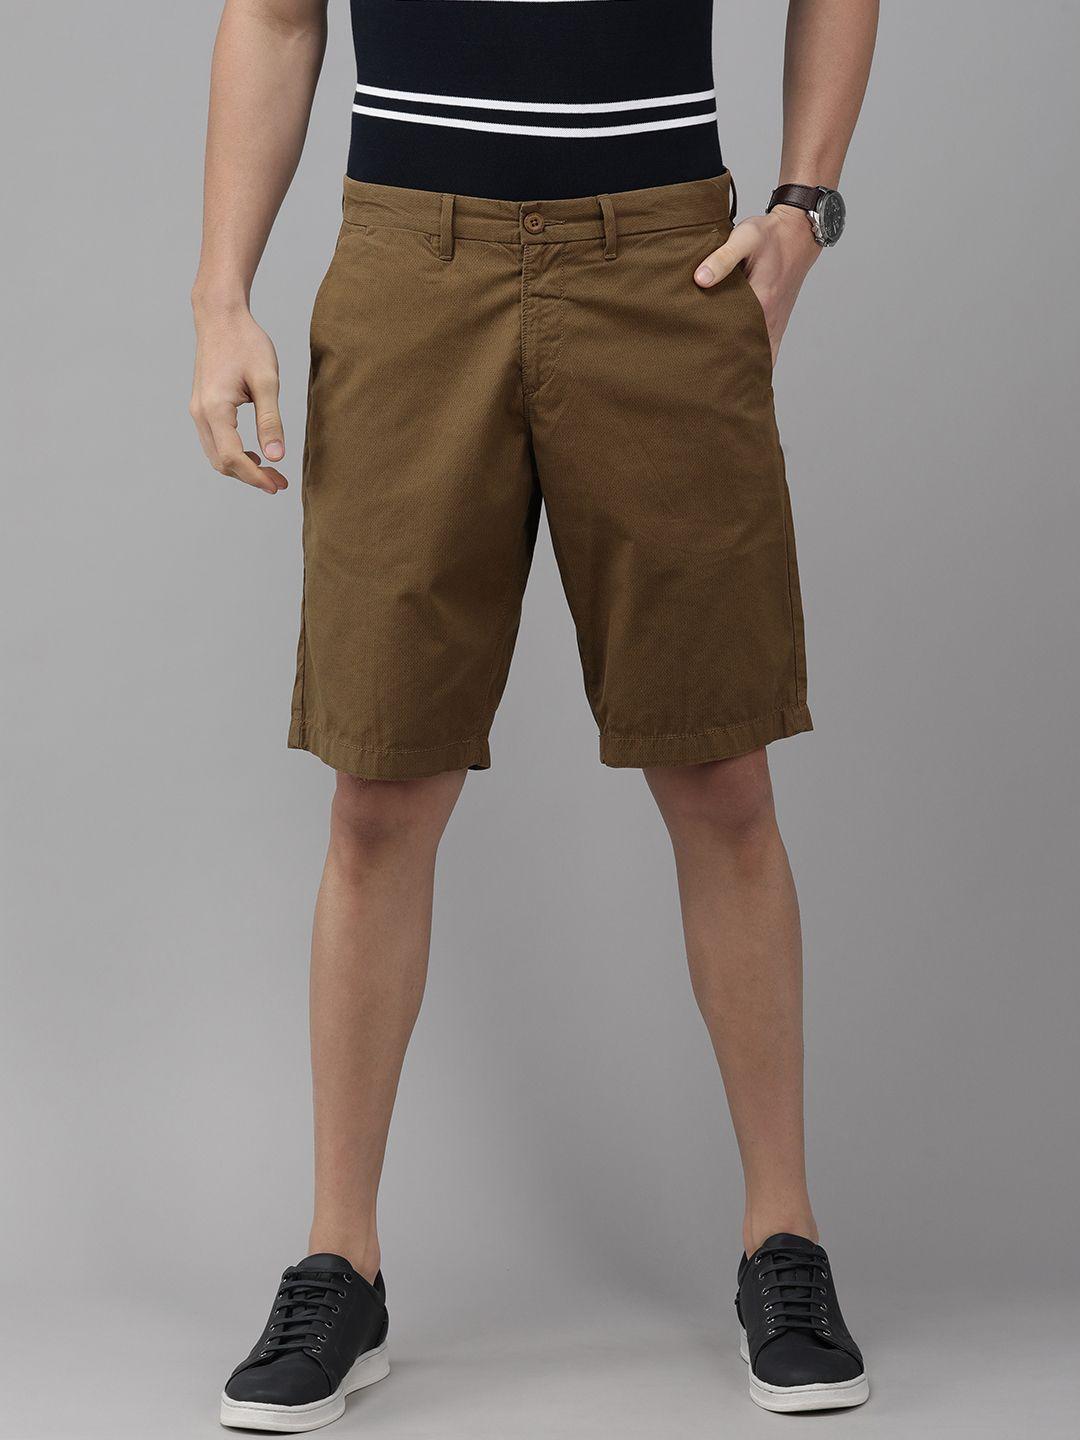 u s polo assn men khaki printed slim fit pure cotton chino shorts